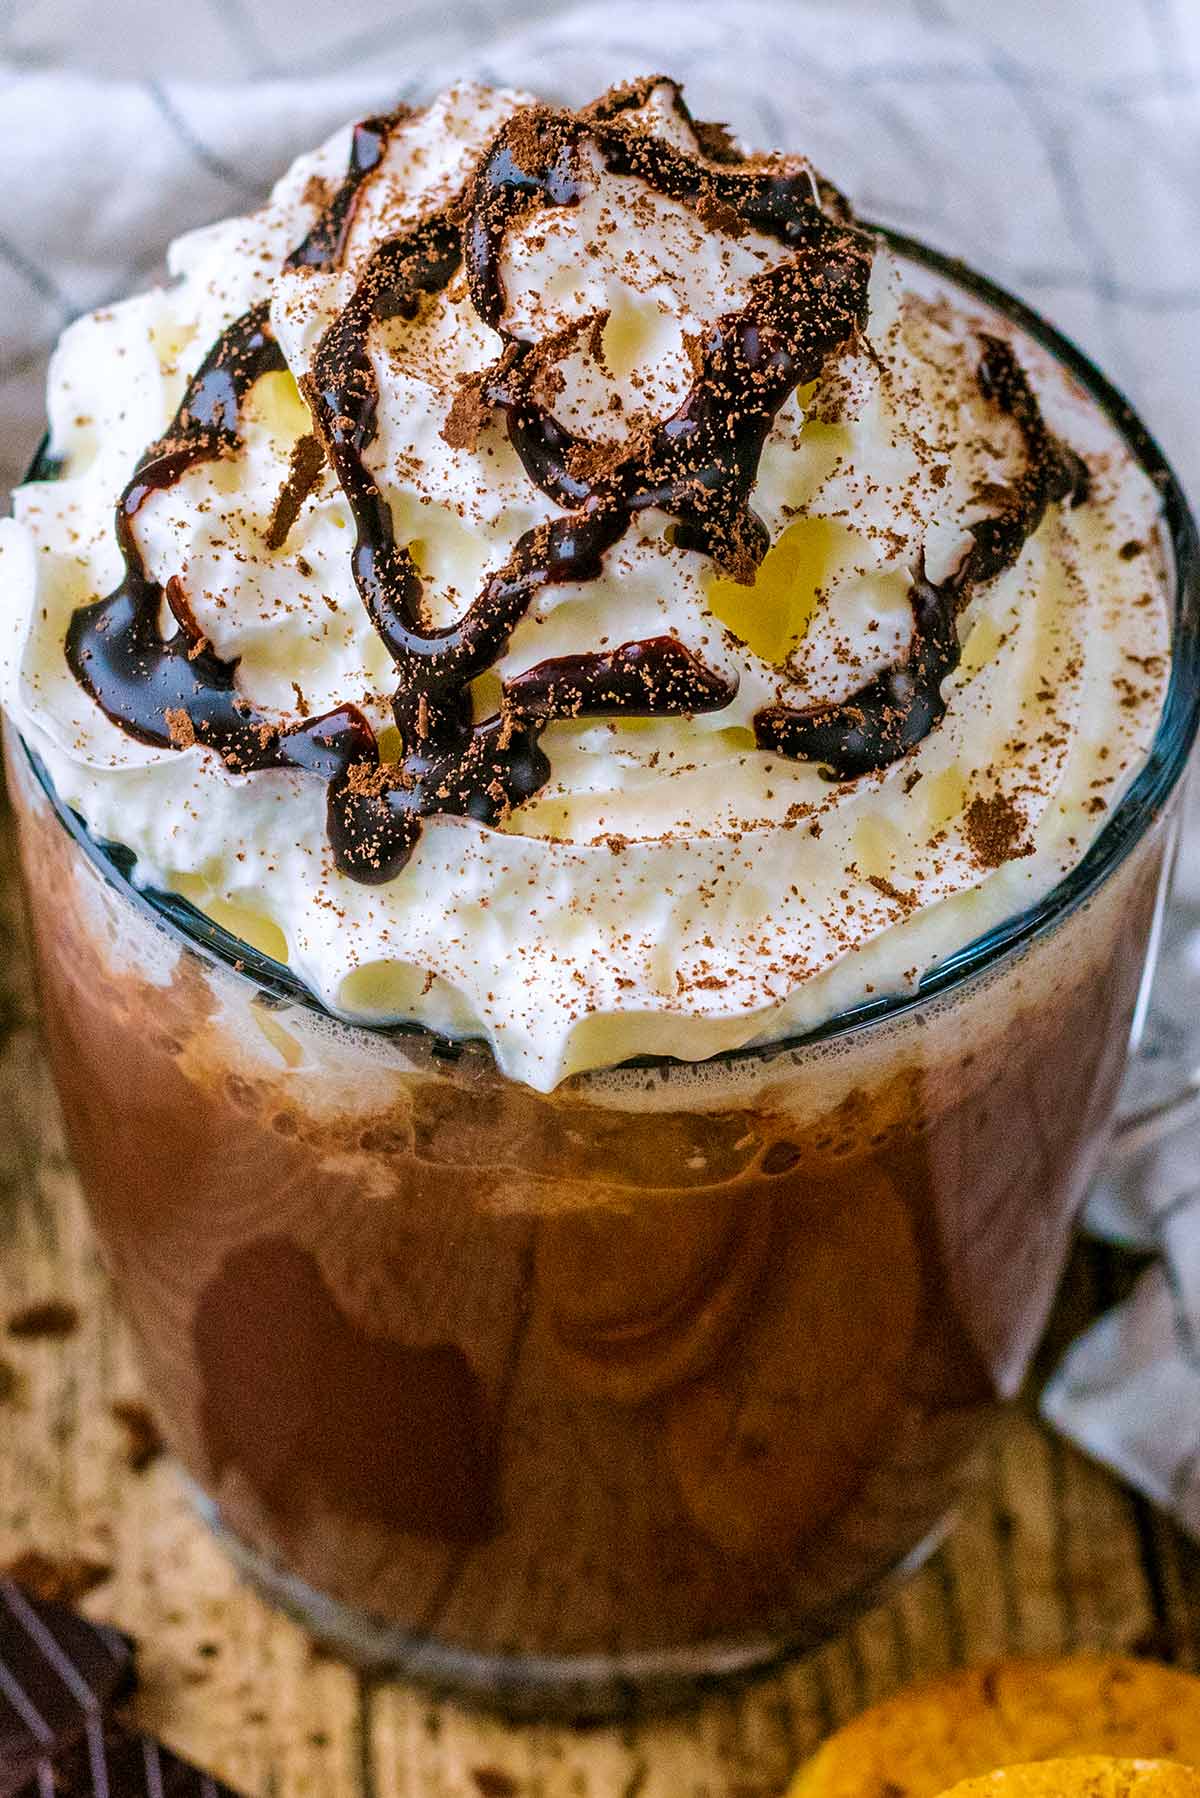 Whipped cream and chocolate sauce on top of a mug of hot chocolate.